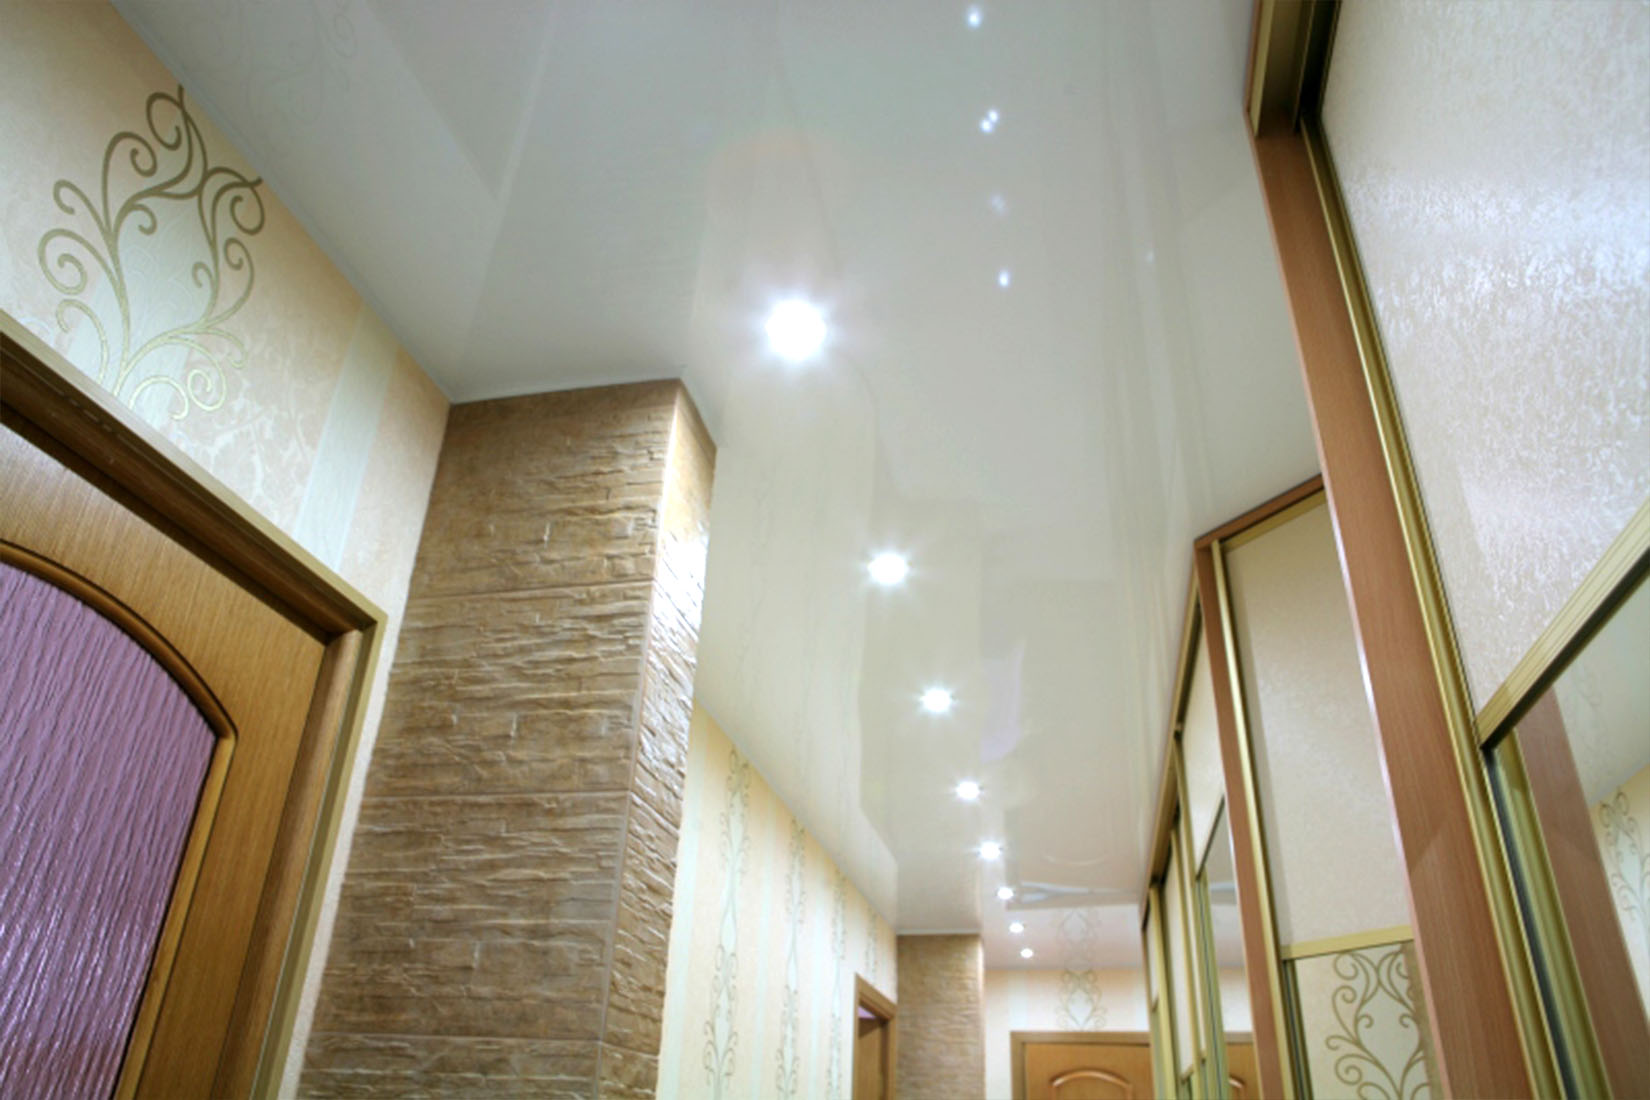 stretch ceiling in the corridor photo decor